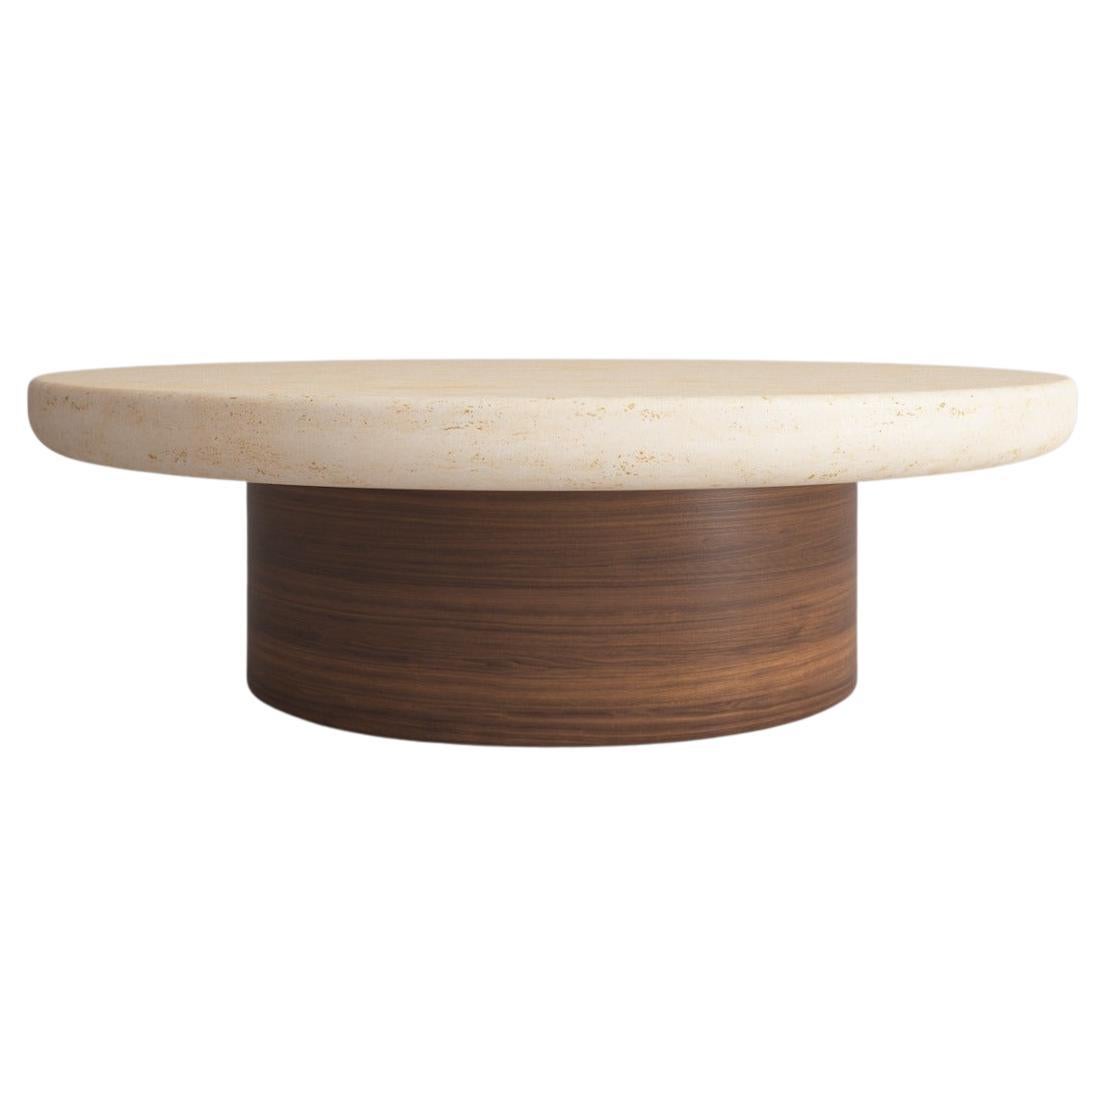 Lessa, 21st Century European Side Table Designed by Studio Rig Travertino Wood